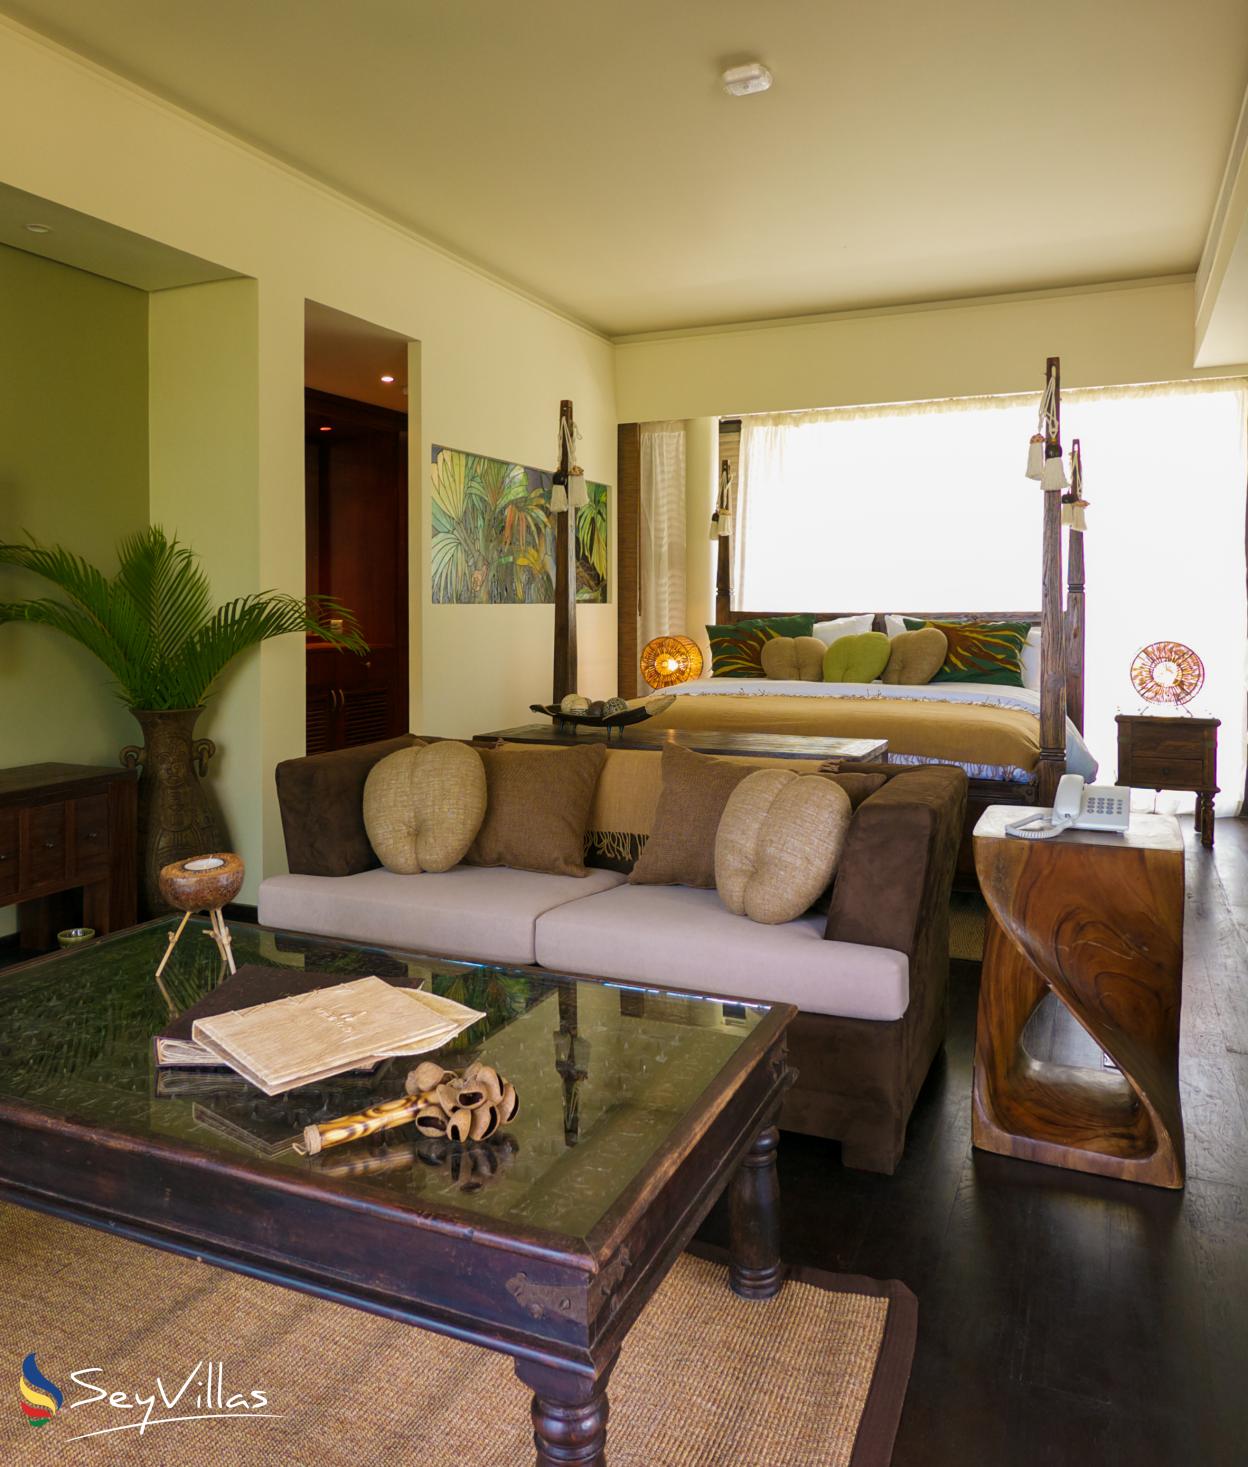 Foto 72: Dhevatara Beach Hotel - Classic Suite avec lit king-size - Praslin (Seychelles)